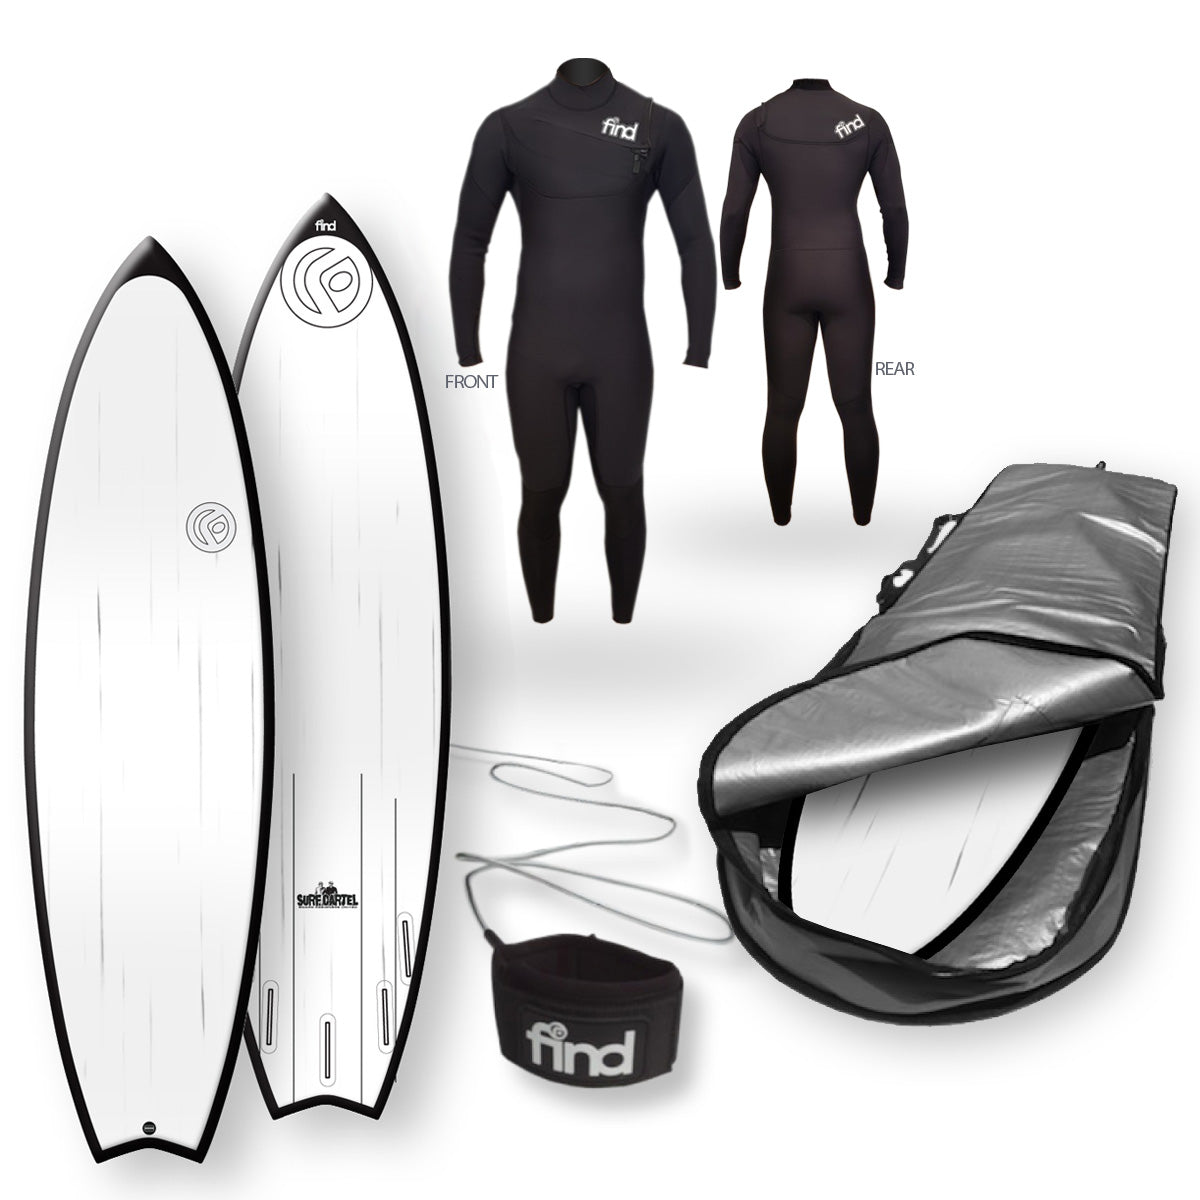 Find™ Speedsta 64 Polytec Black Streaked Surfboard Cover Leash Wetsuit Package - Default Title